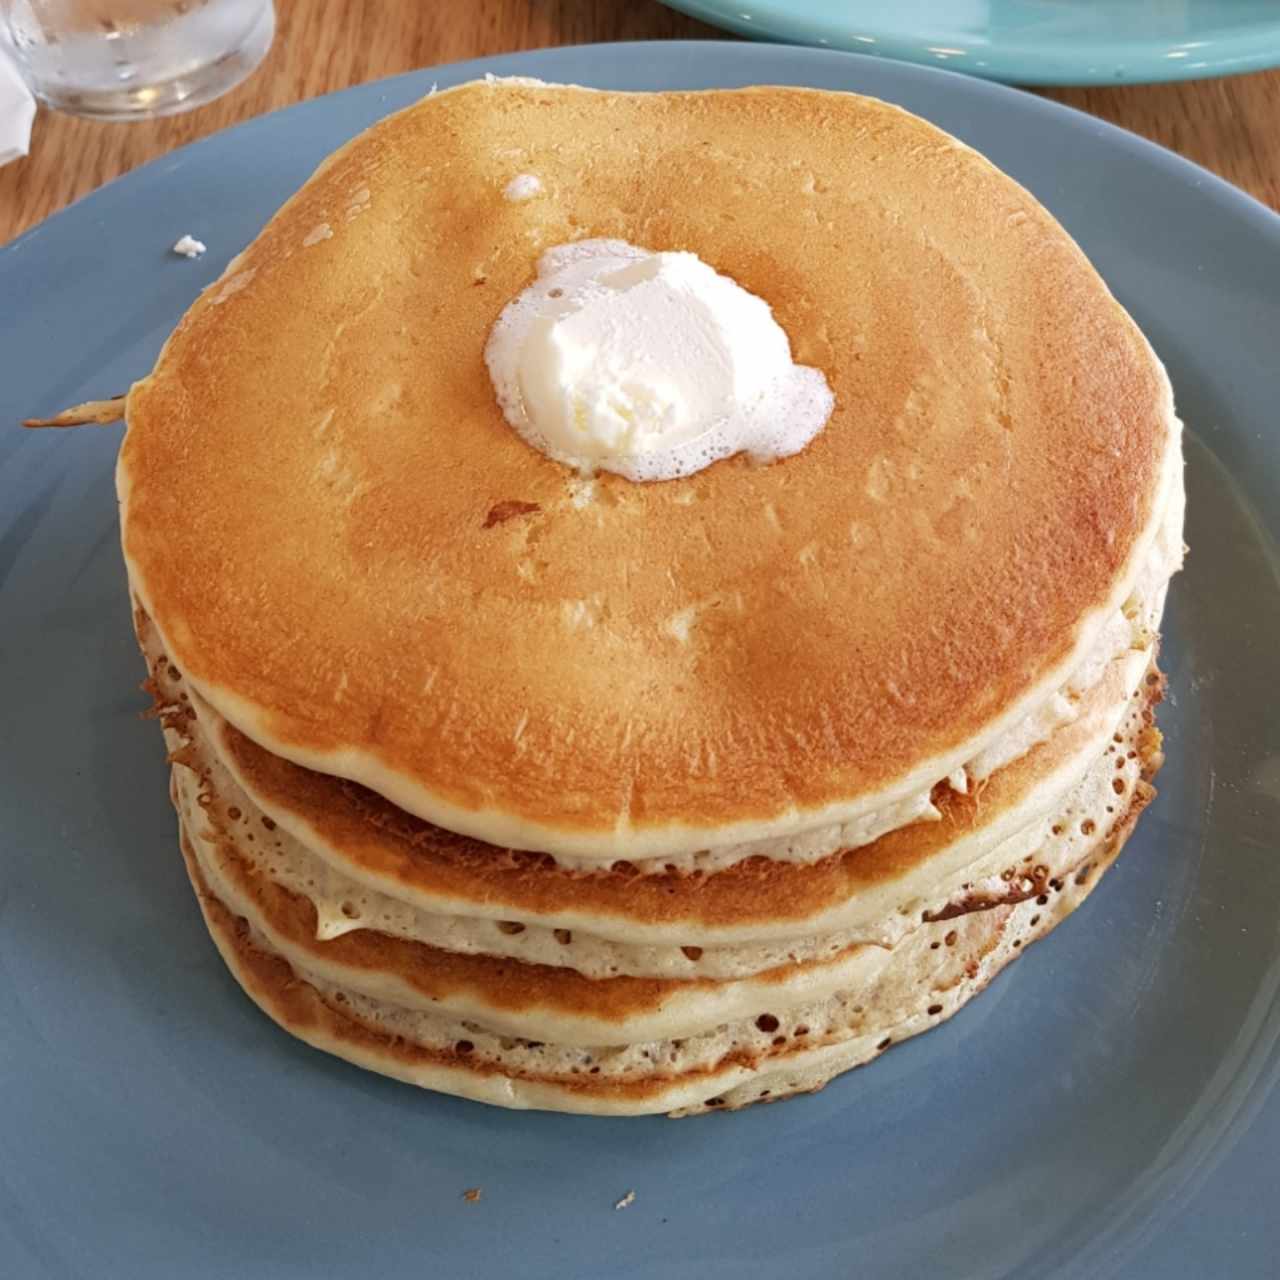 Original buttermilk pancakes